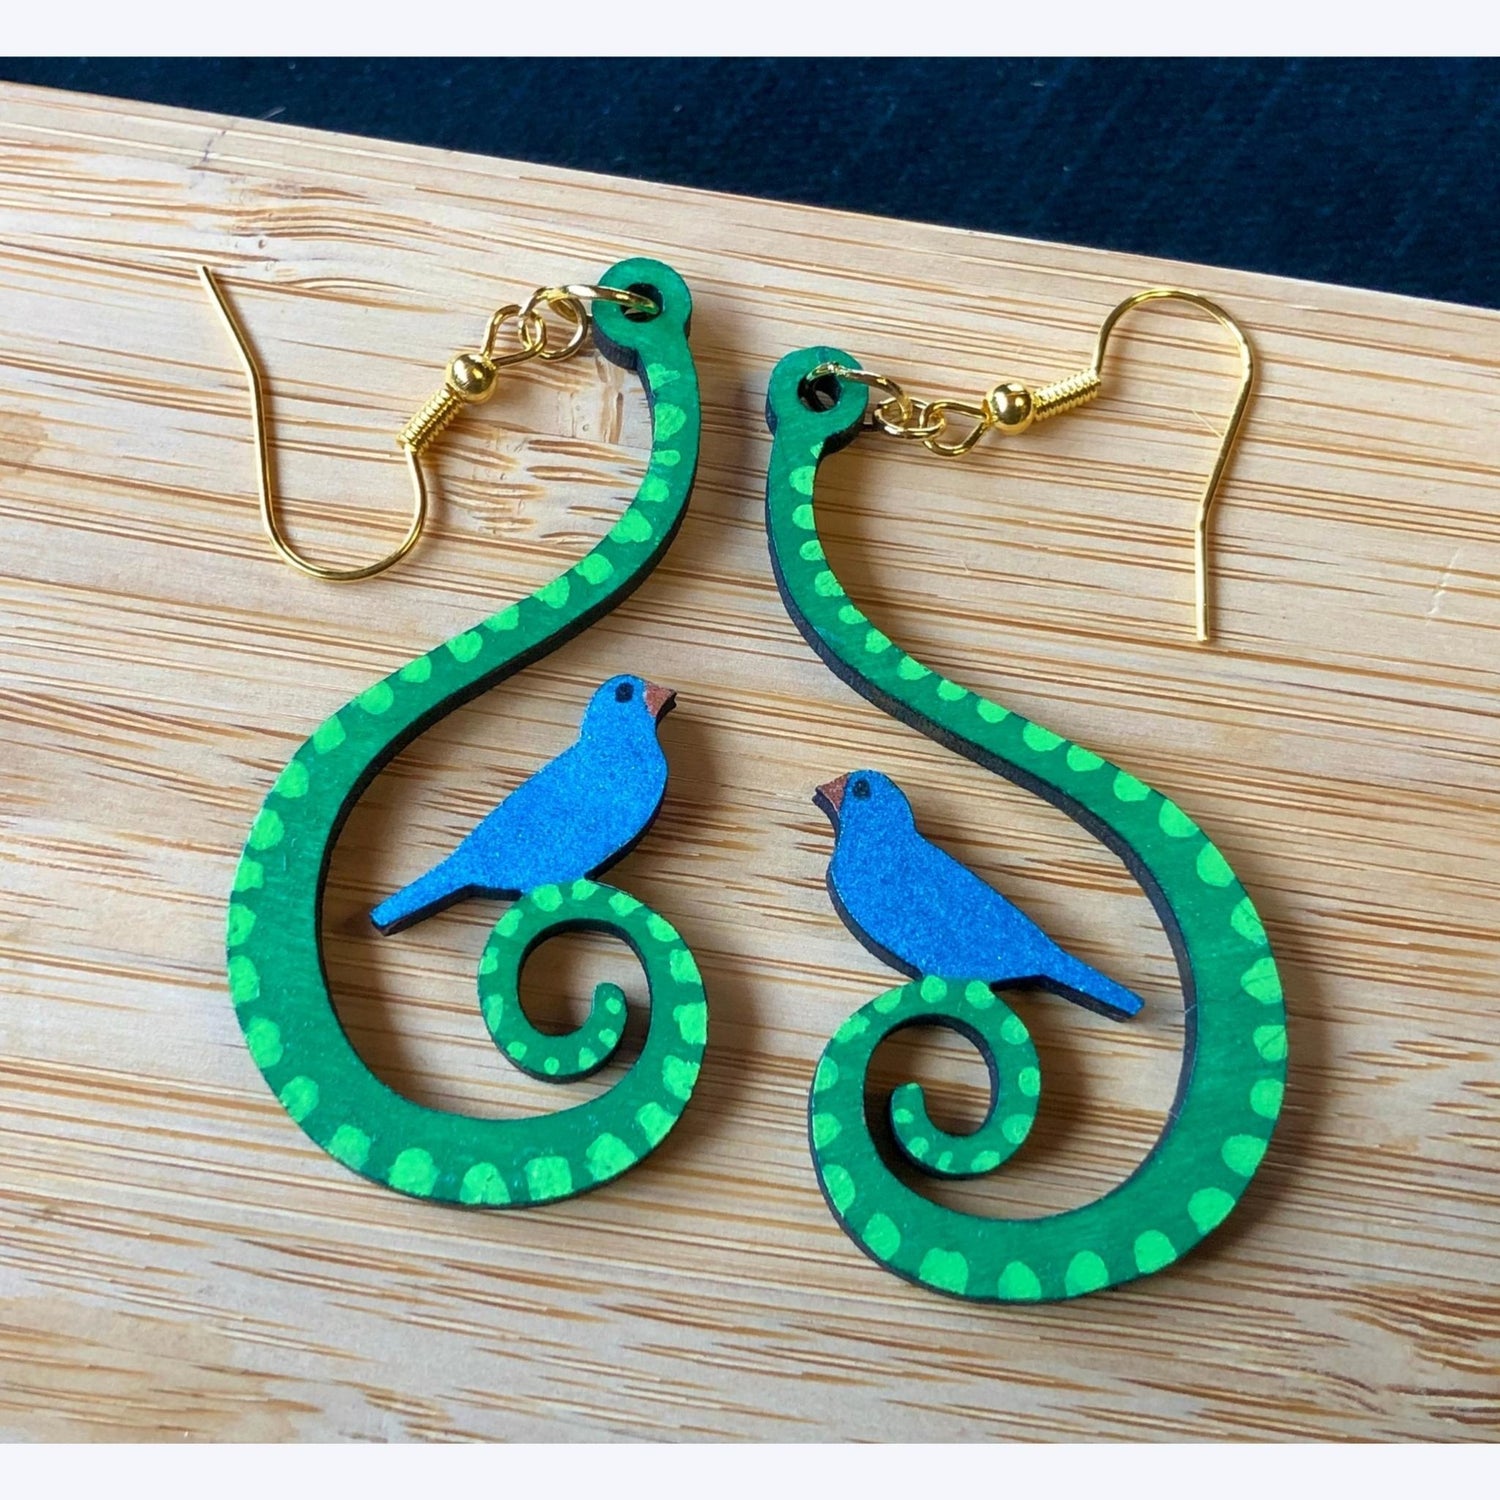 Songbird - Hand-Painted Wood Earrings - Driftless Enchantments